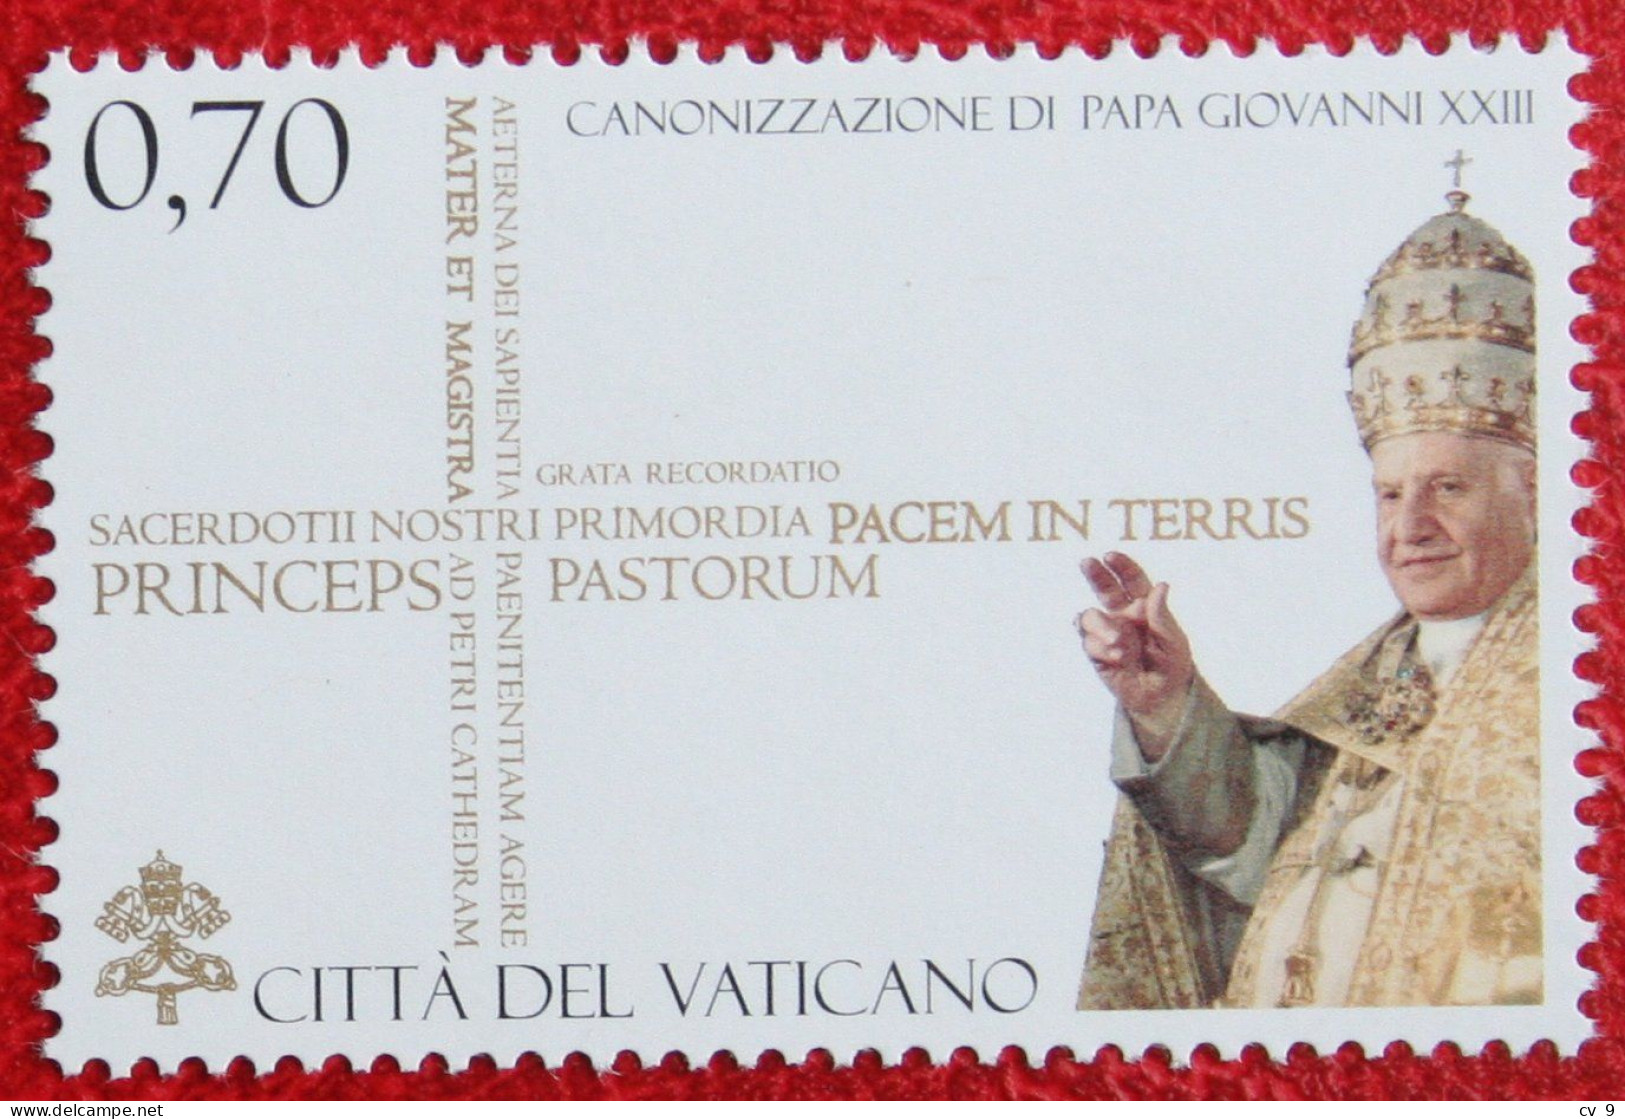 Canonification Of Pope John XXIII  2014 Mi 1799 Yv 1653 POSTFRIS / MNH / ** VATICANO VATICAN - Nuovi